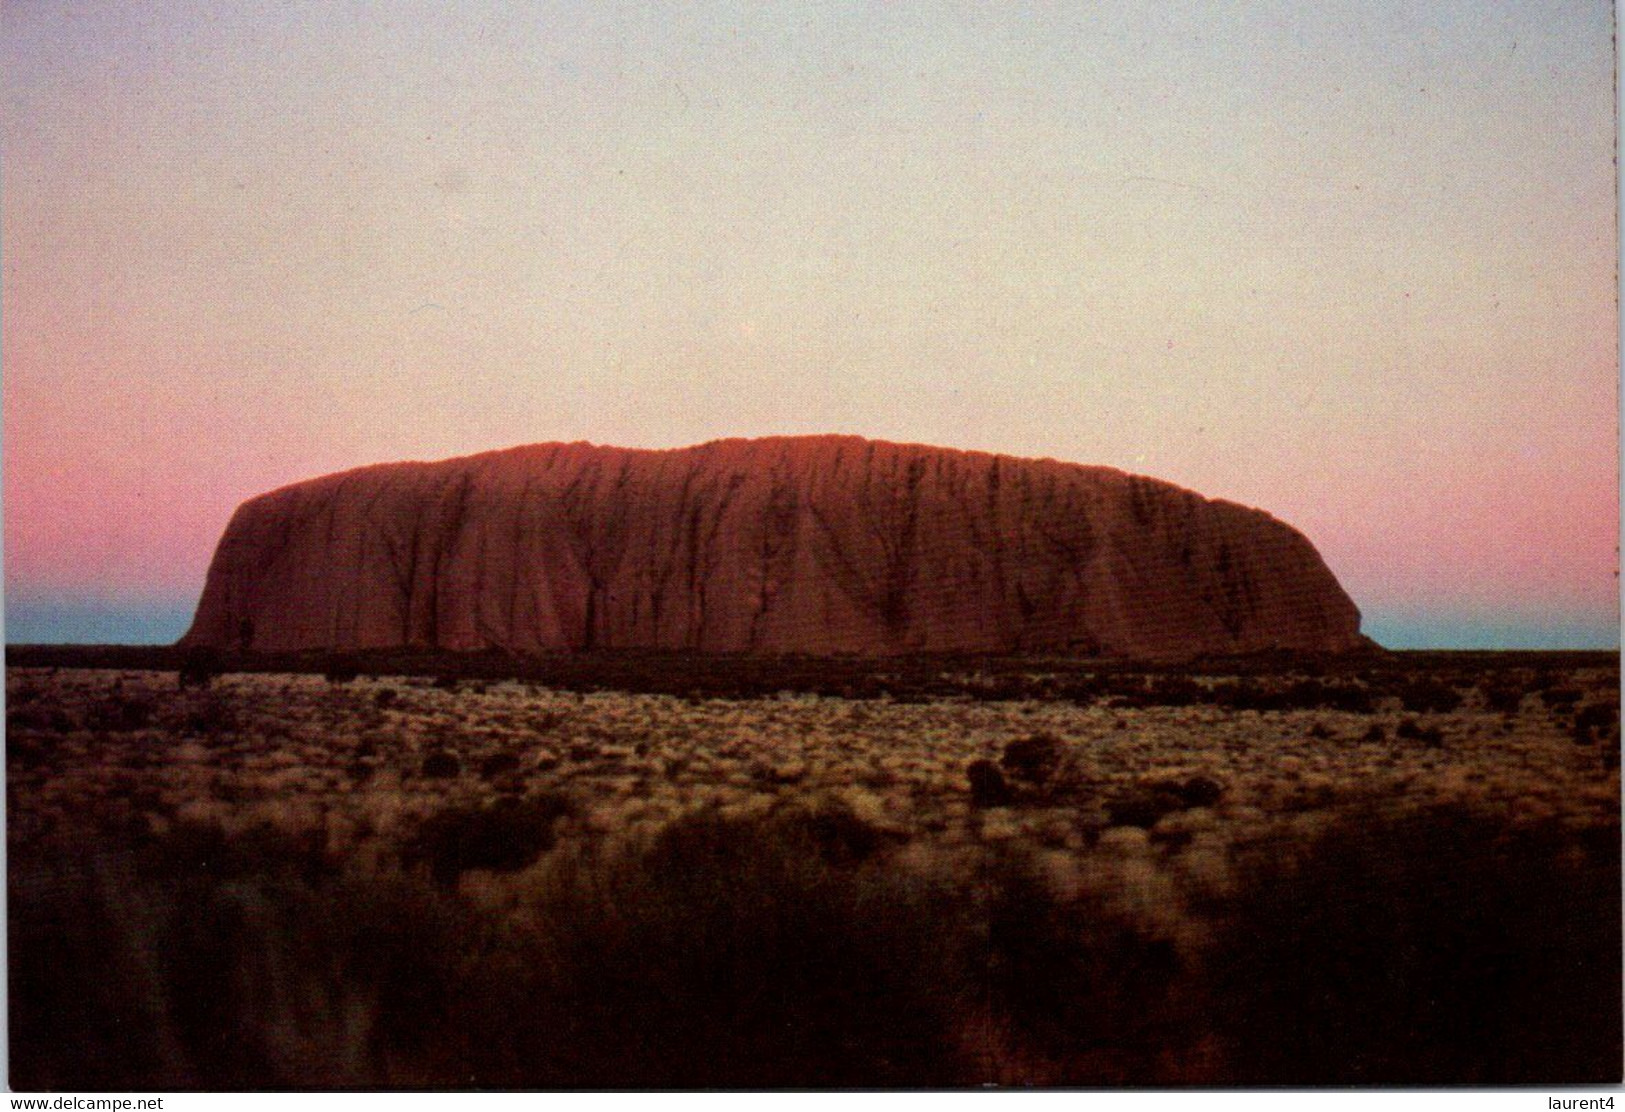 (5 H 51) Australia Post Pre-Paid 18 Cent Postcards - 2 Postcards - NT + WA (Ulluru & Perth) - Uluru & The Olgas